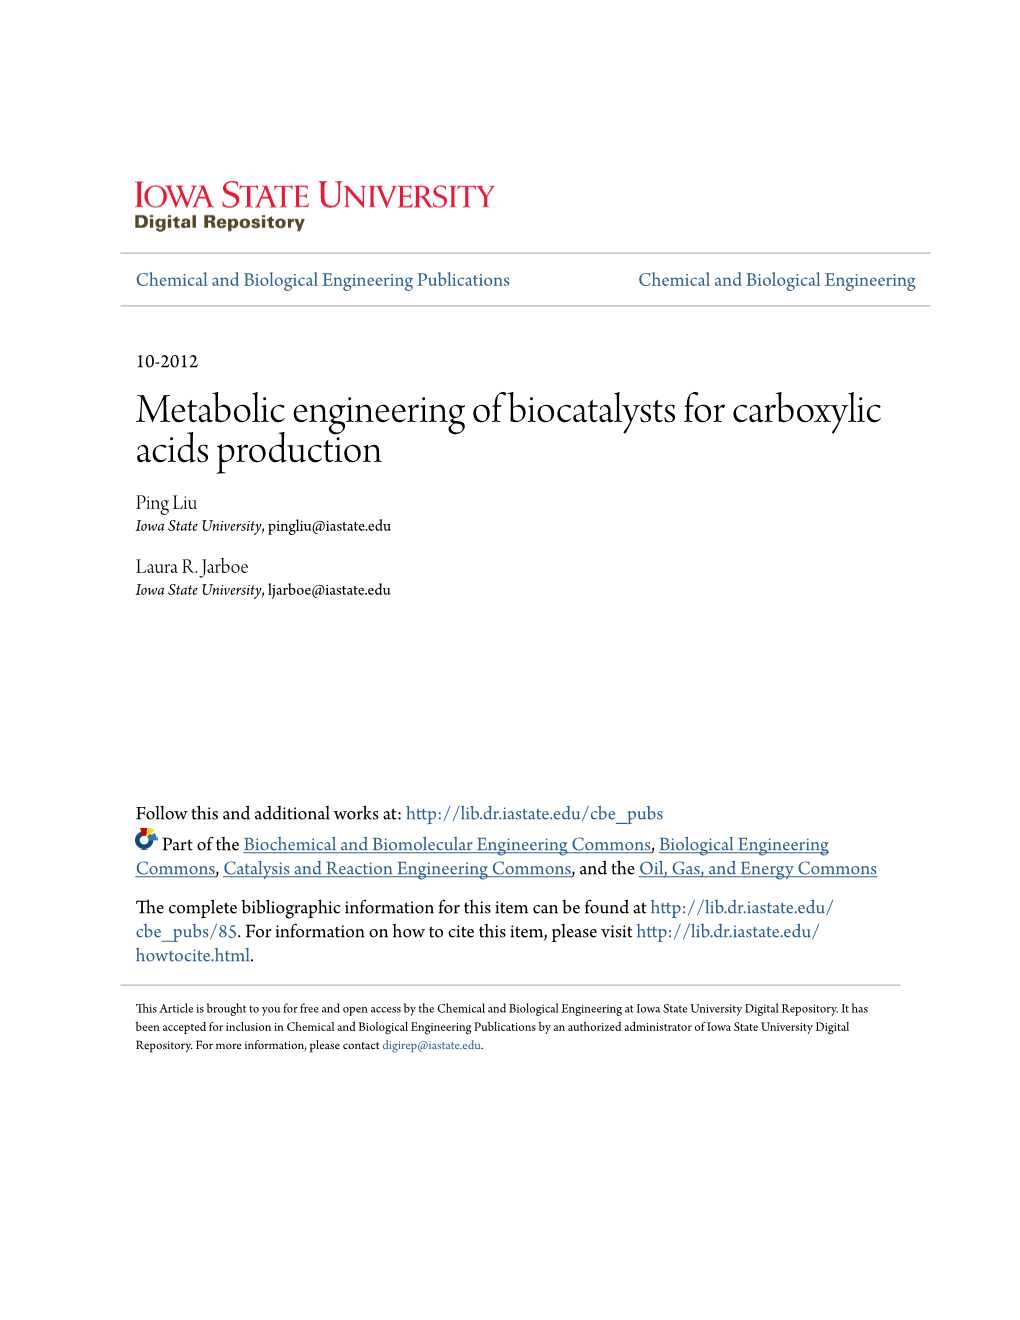 Metabolic Engineering of Biocatalysts for Carboxylic Acids Production Ping Liu Iowa State University, Pingliu@Iastate.Edu